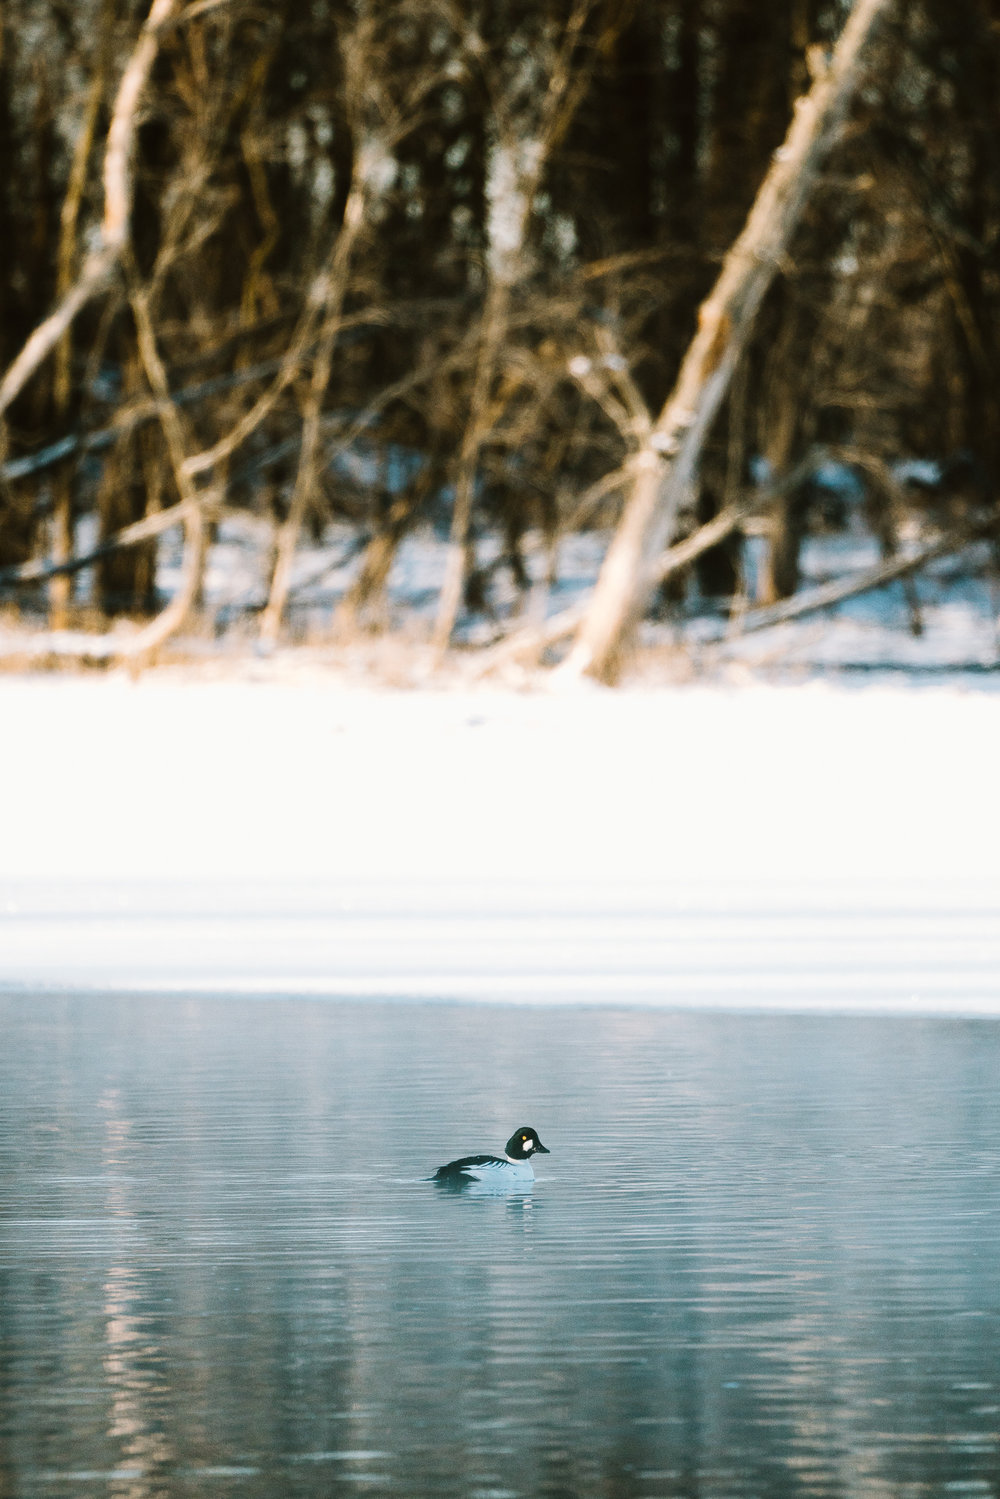 GoldenEye Duck at Colvill Park in Red Wing, Minnesota